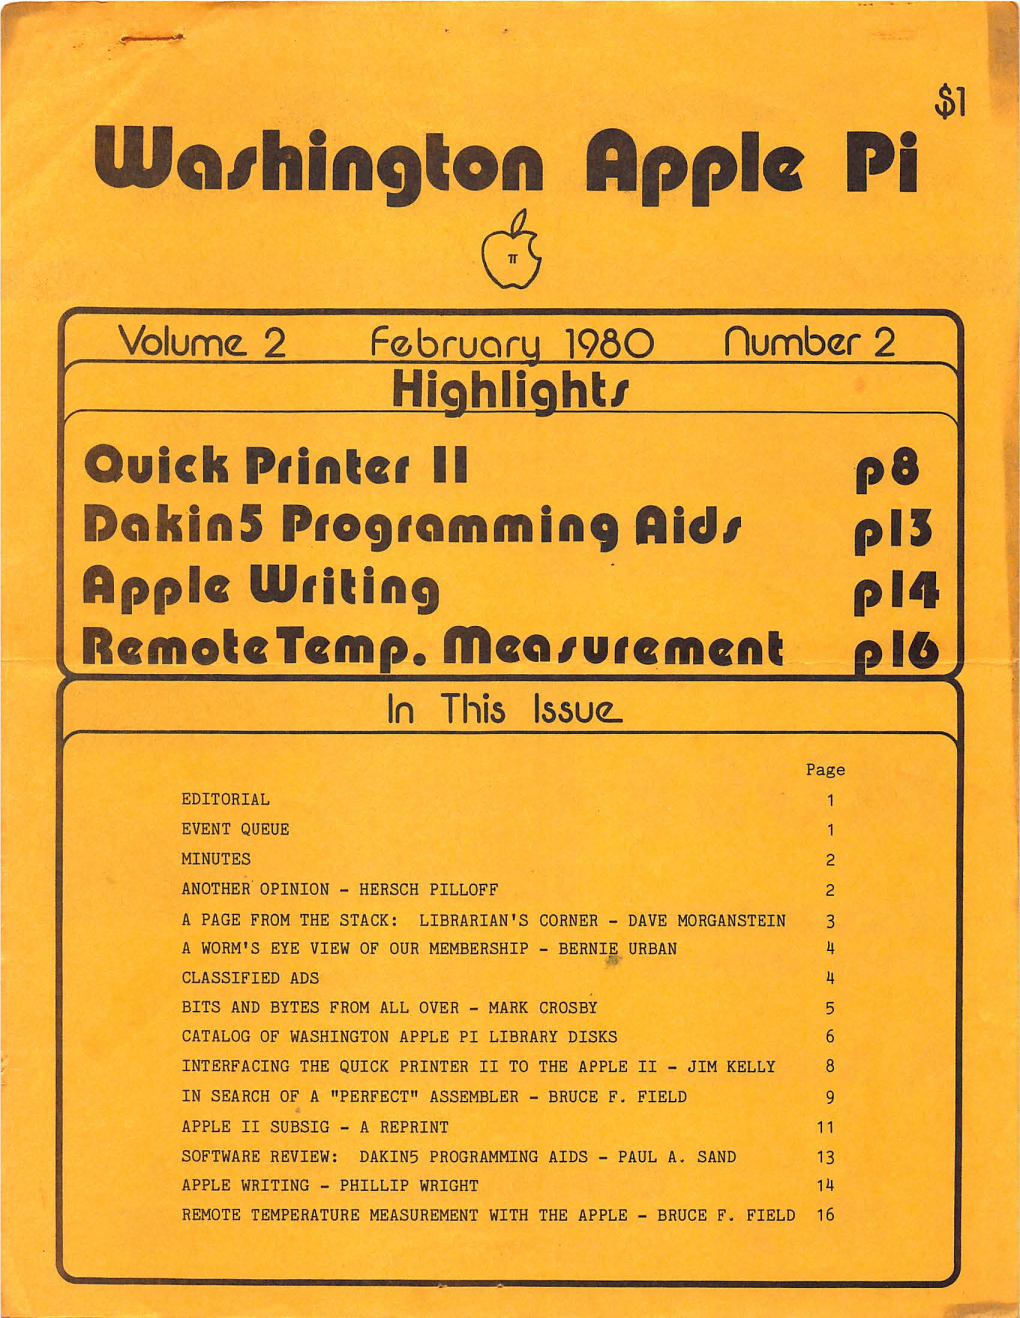 Washington Apple Pi Journal, February 1980